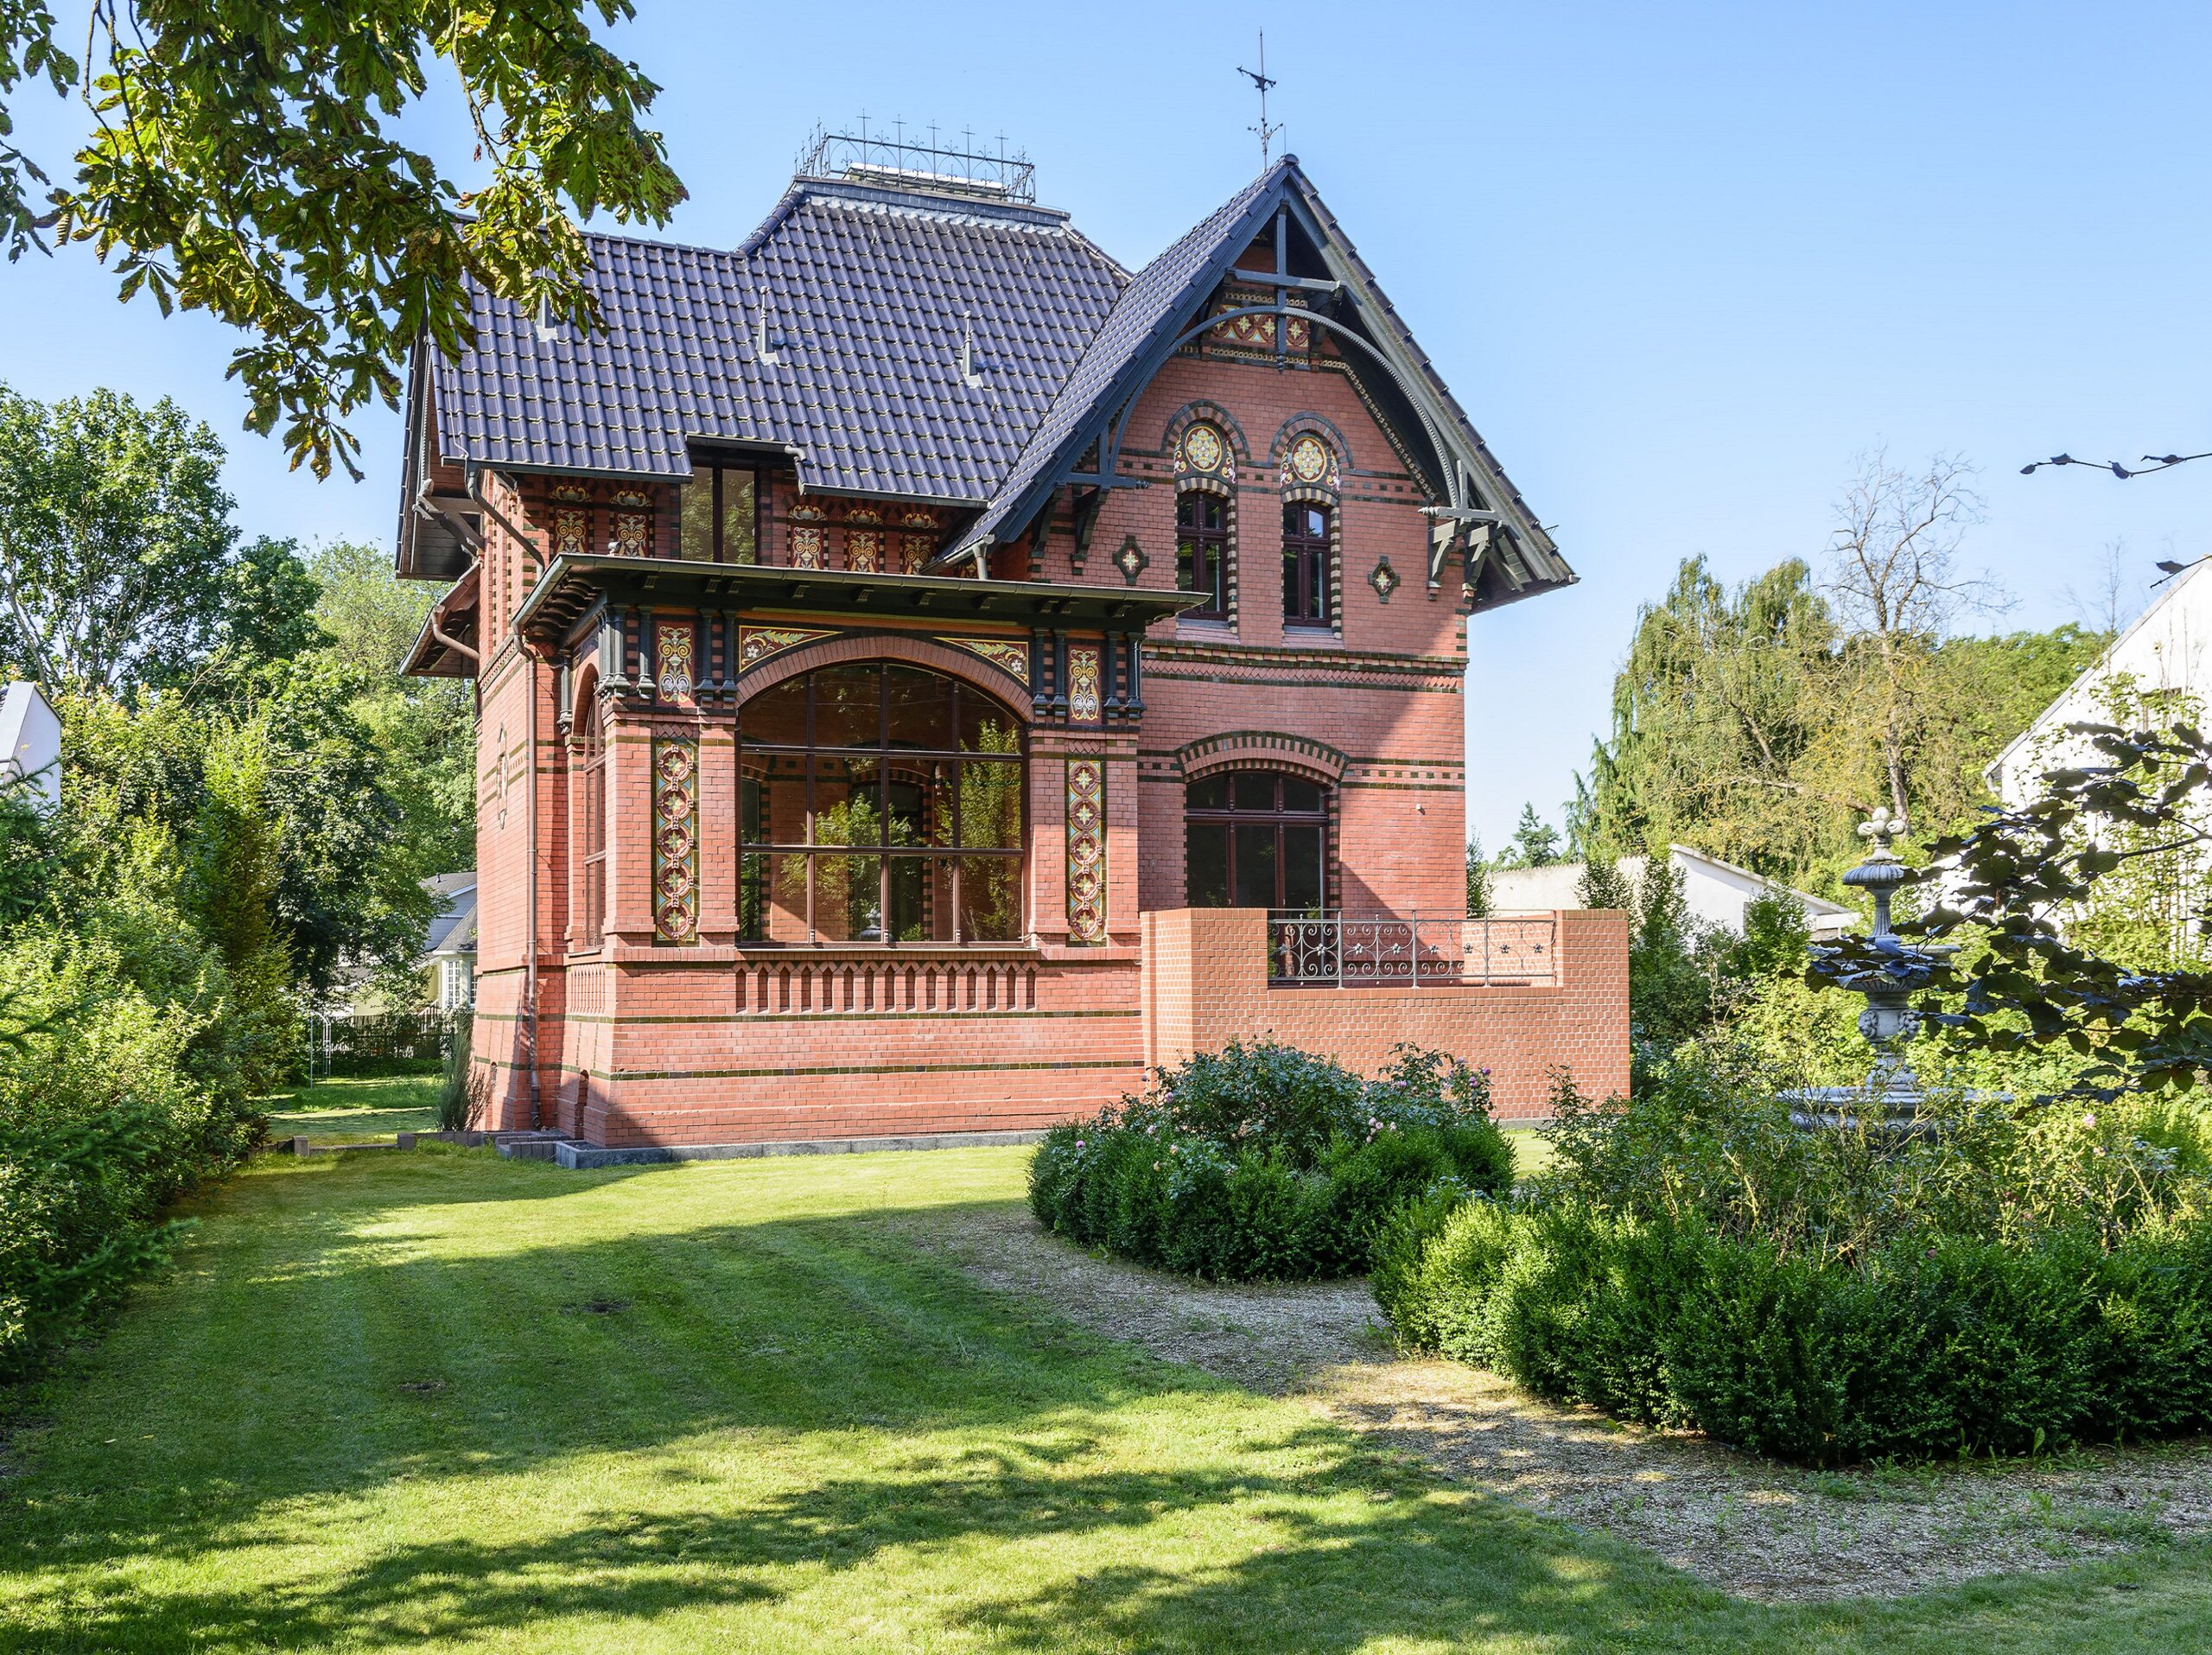 Villa Sommerfeld, bei Berlin – früher exquisiter Jugendstil